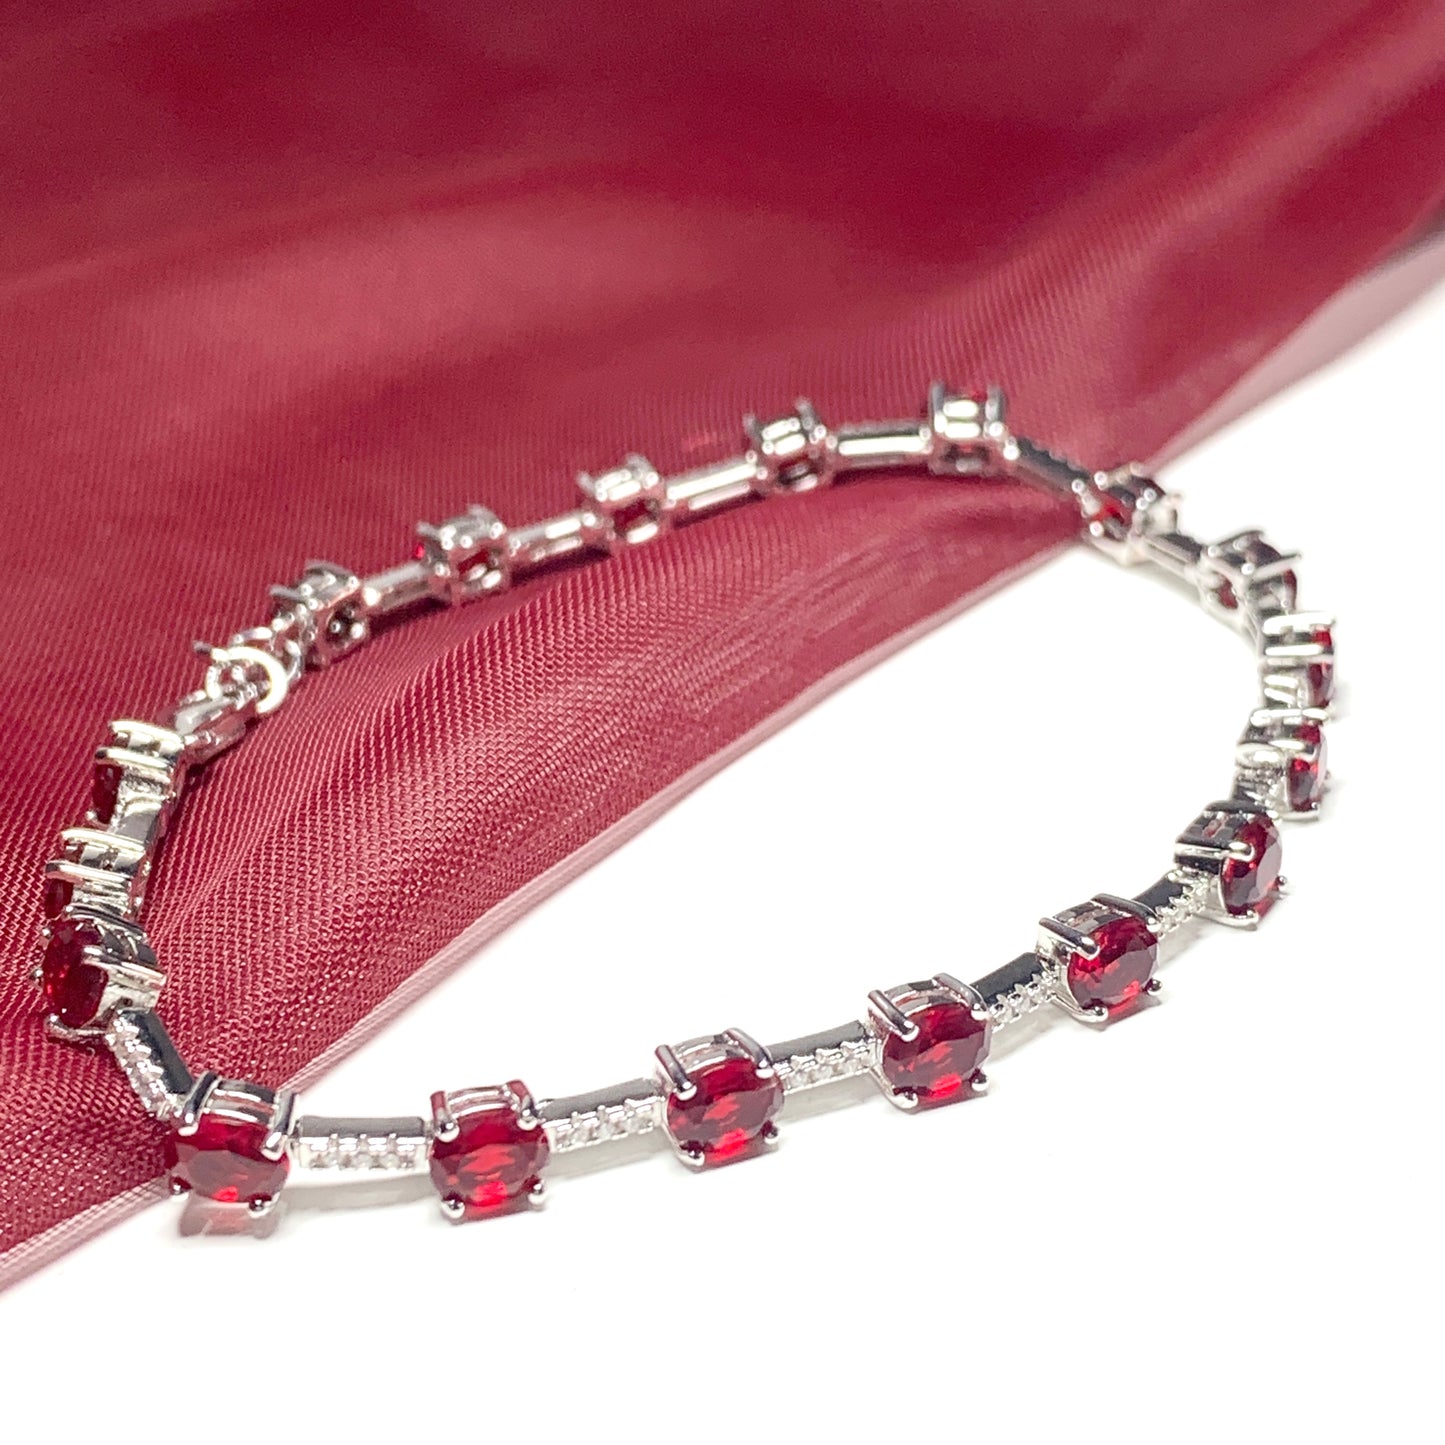 Oval sterling silver red cubic zirconia bracelet